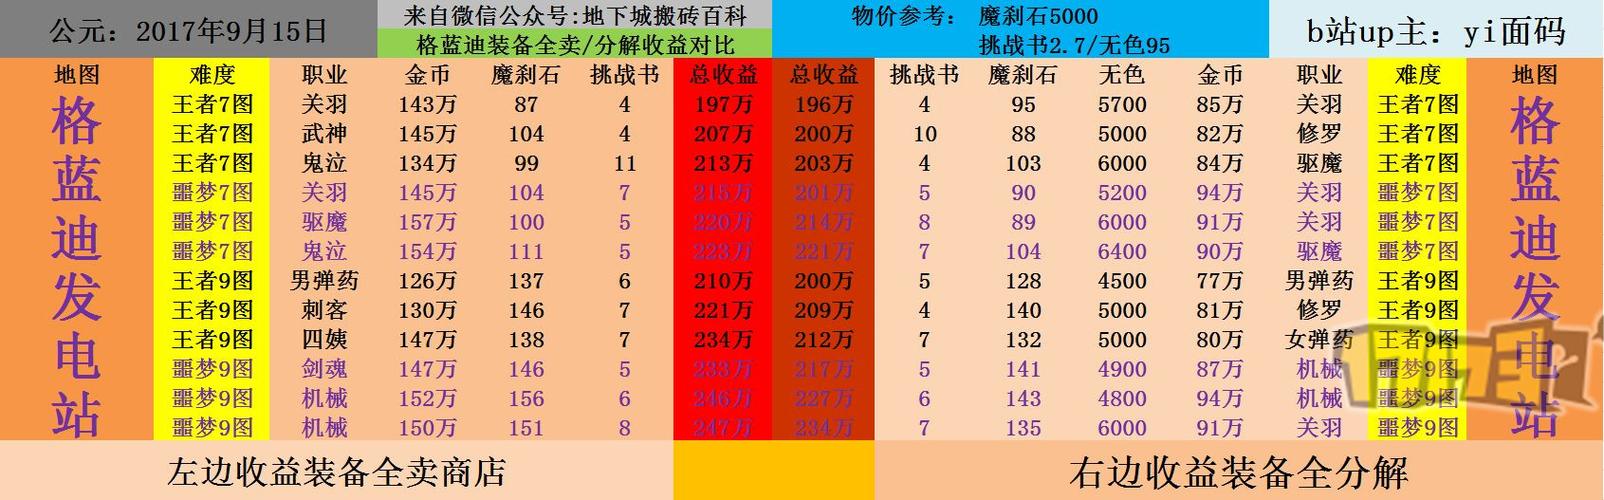 dnf史上最全的搬砖地图收益测试一览图_17173.com中国游戏门户站